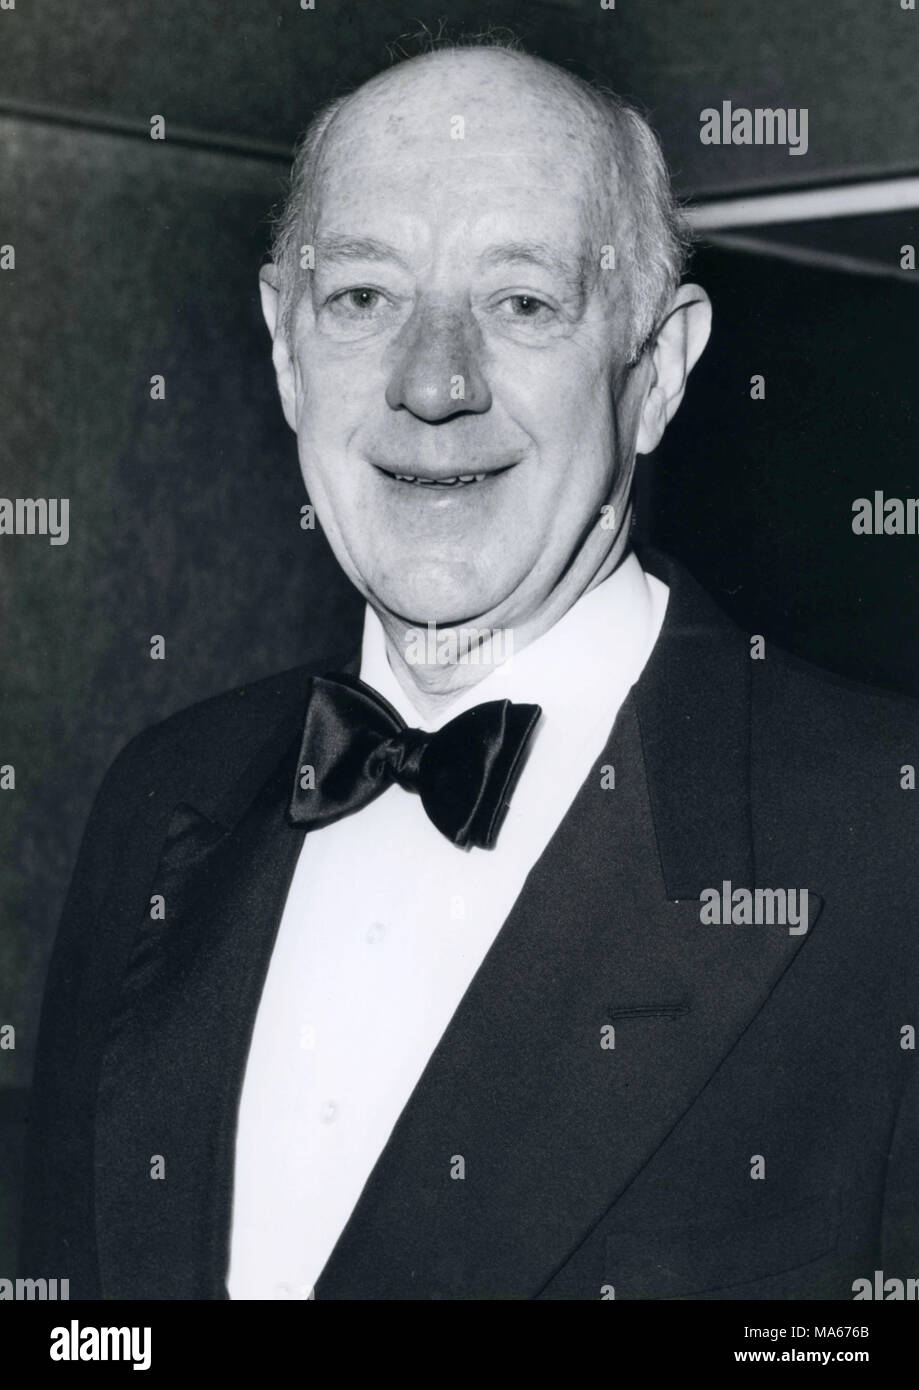 Sir Alec Guinness at the BAFTA Awards 1983 Stock Photo